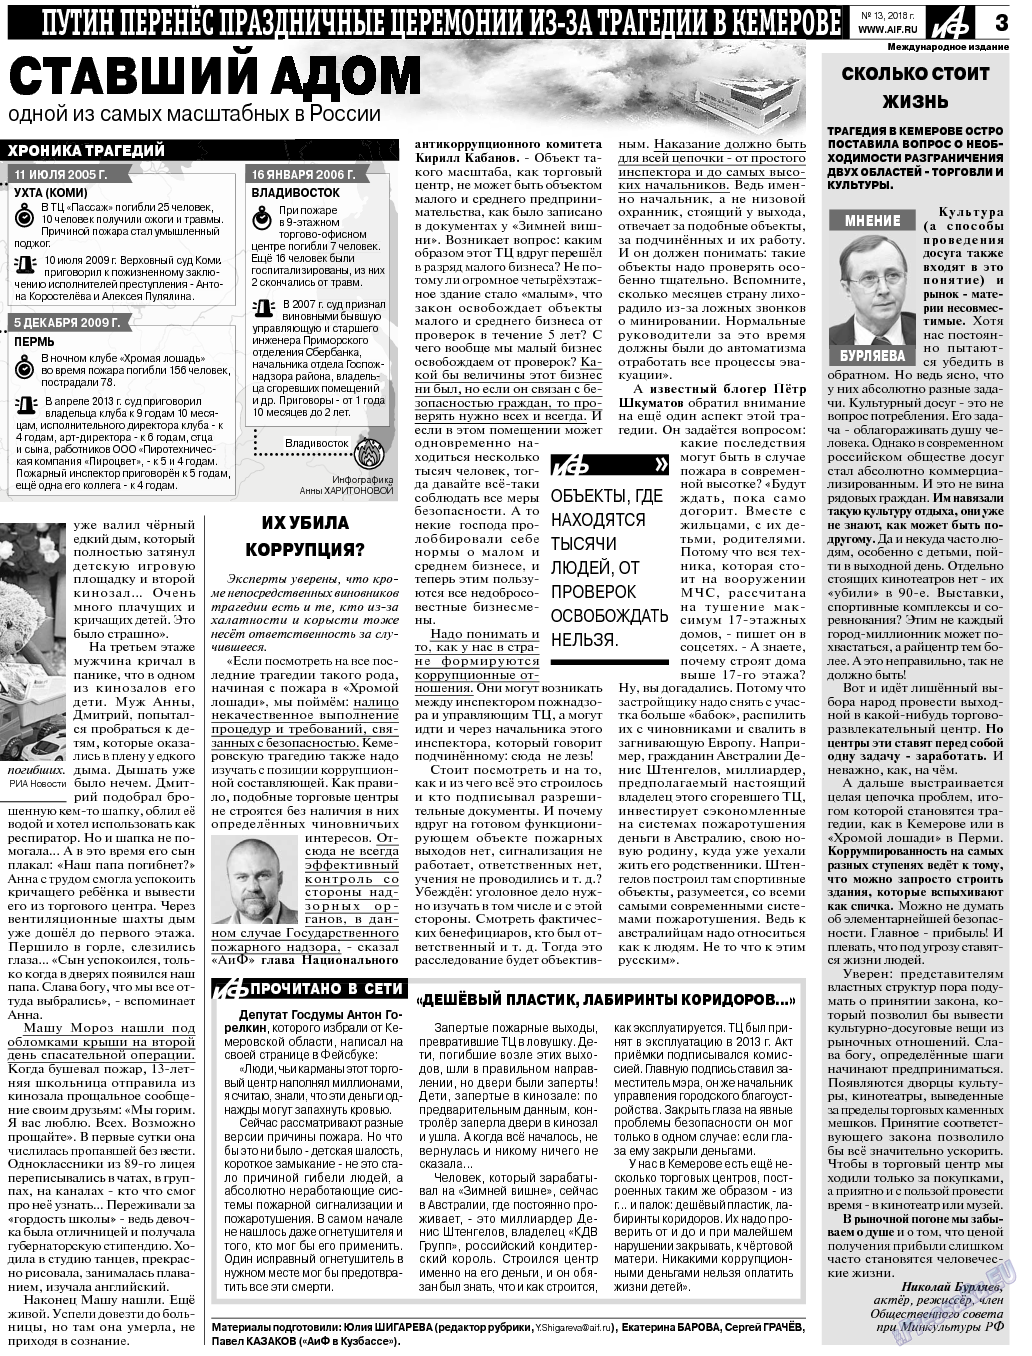 Аргументы и факты Европа, газета. 2018 №13 стр.3